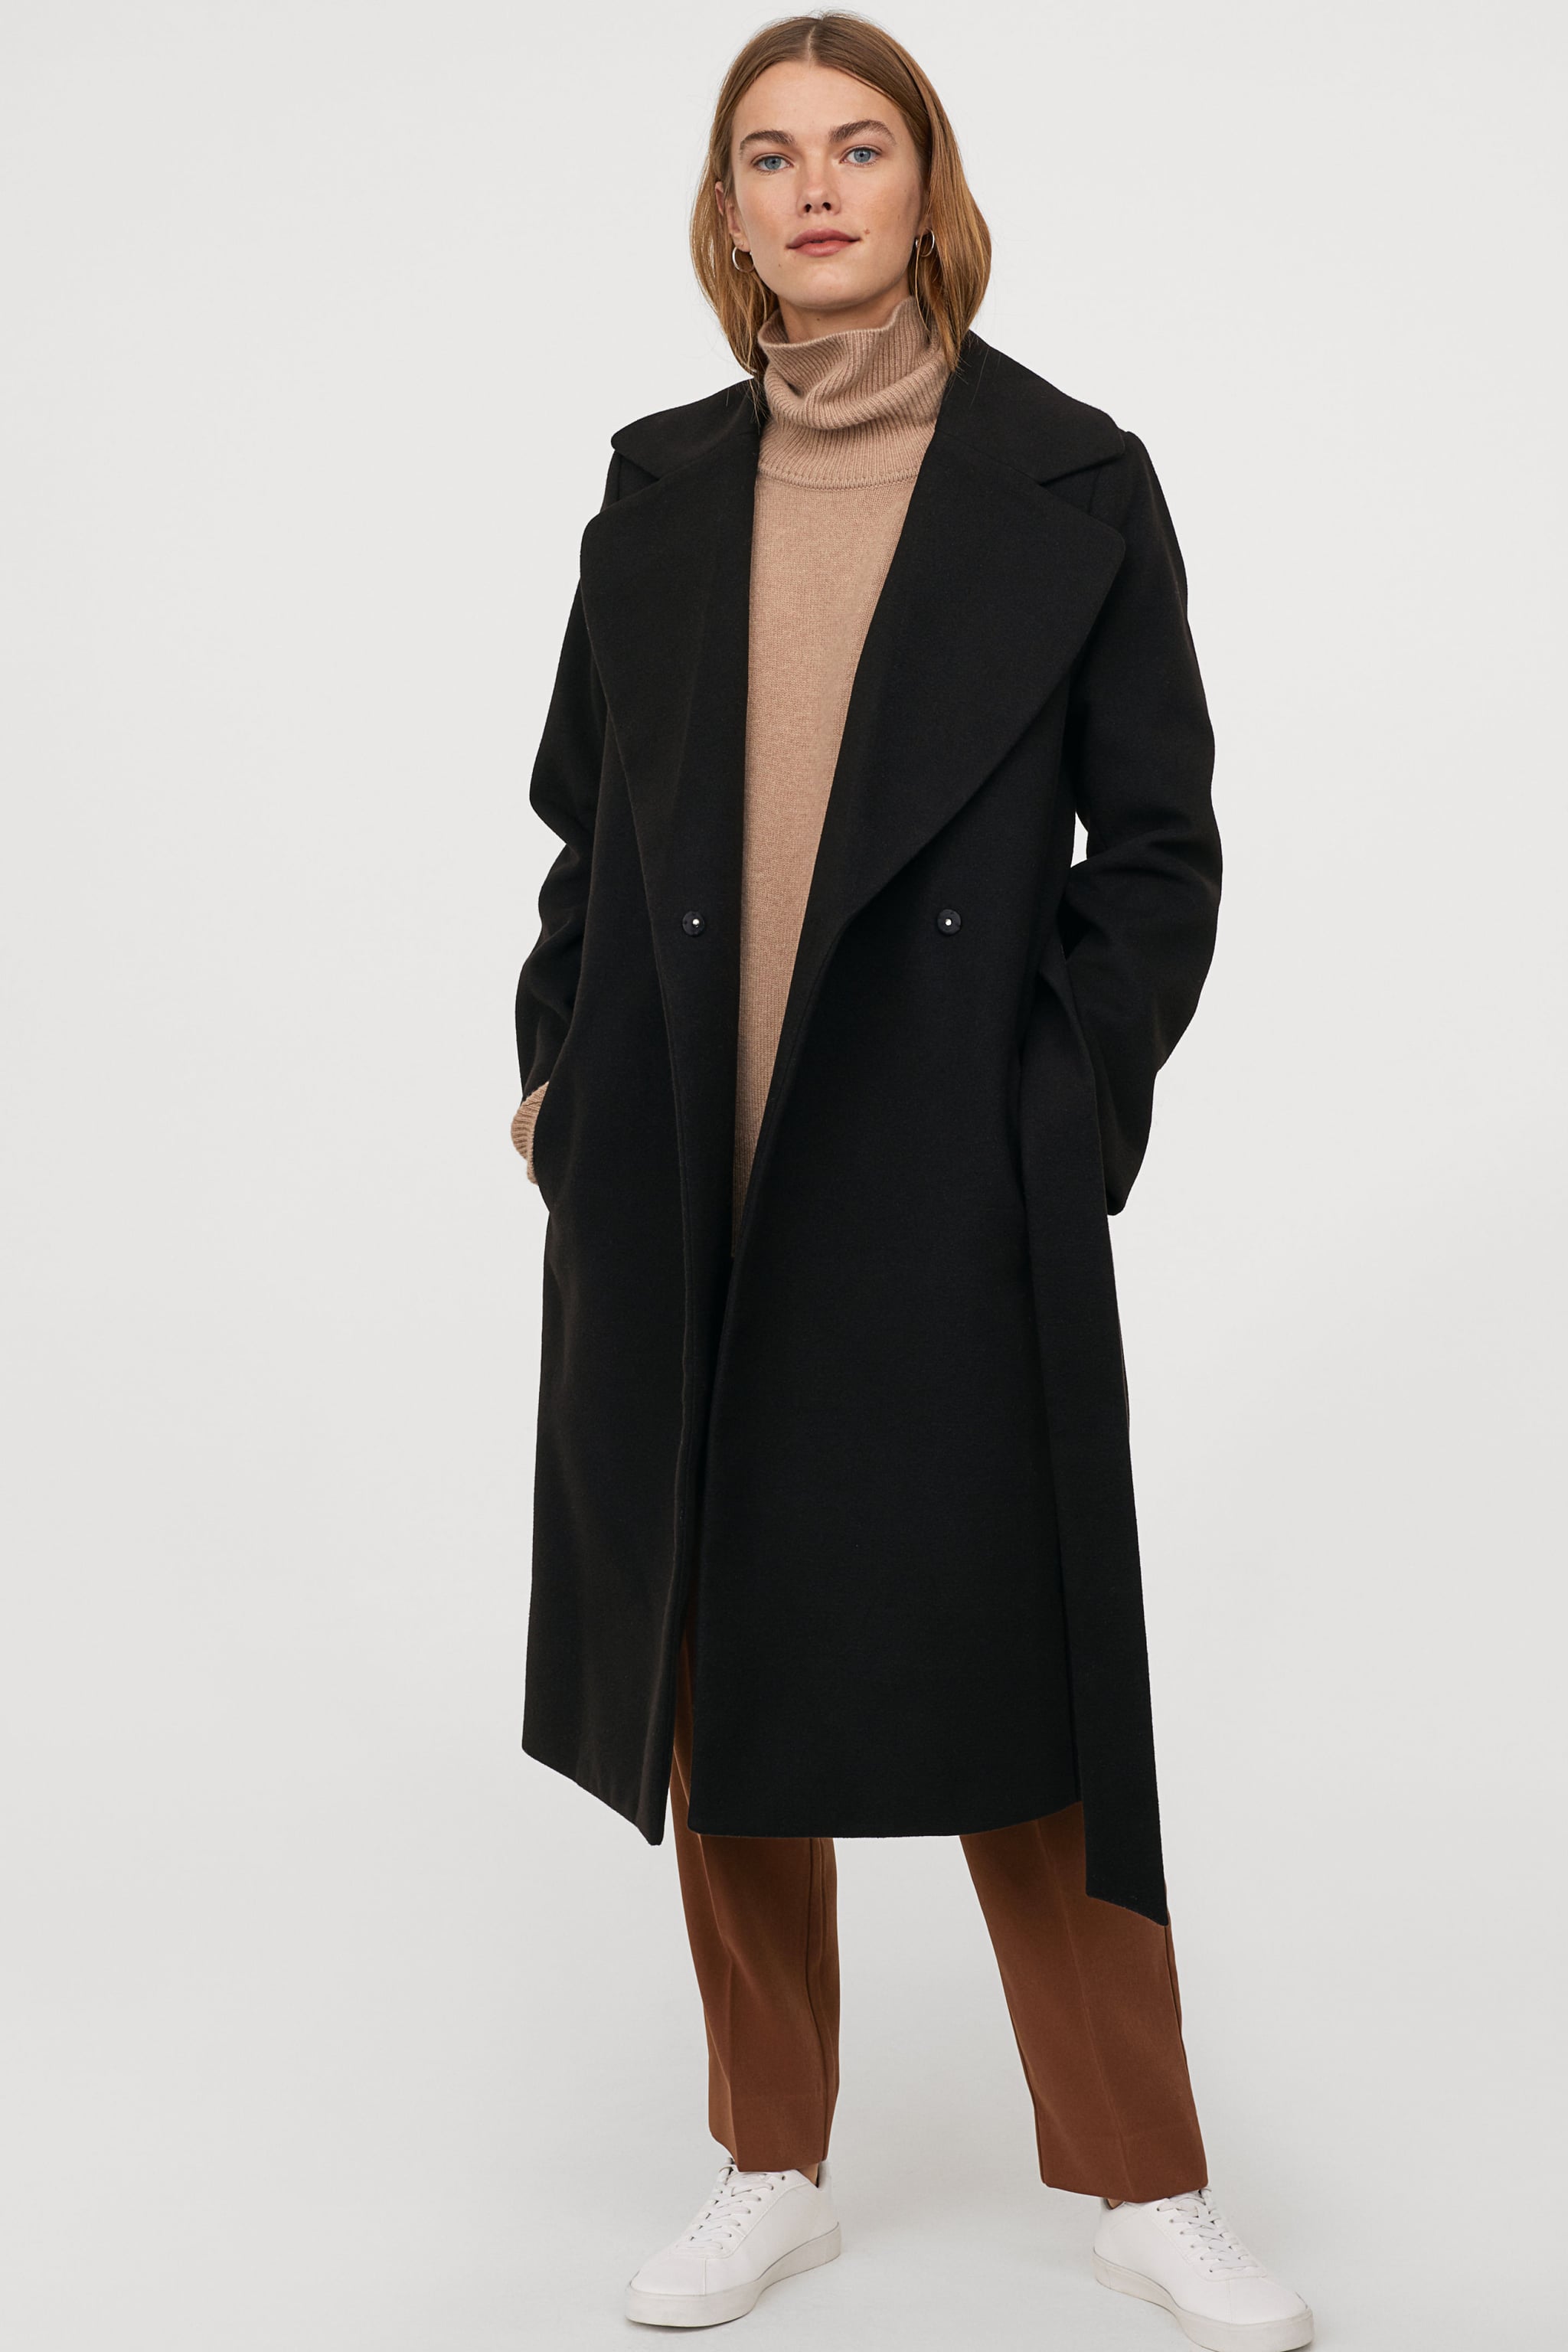 Tåre Retaliate knus H&M Coat with Tie Belt | H&M's Coats Are Beyond Dreamy This Season — These  11 Are Under $100 | POPSUGAR Fashion Photo 2